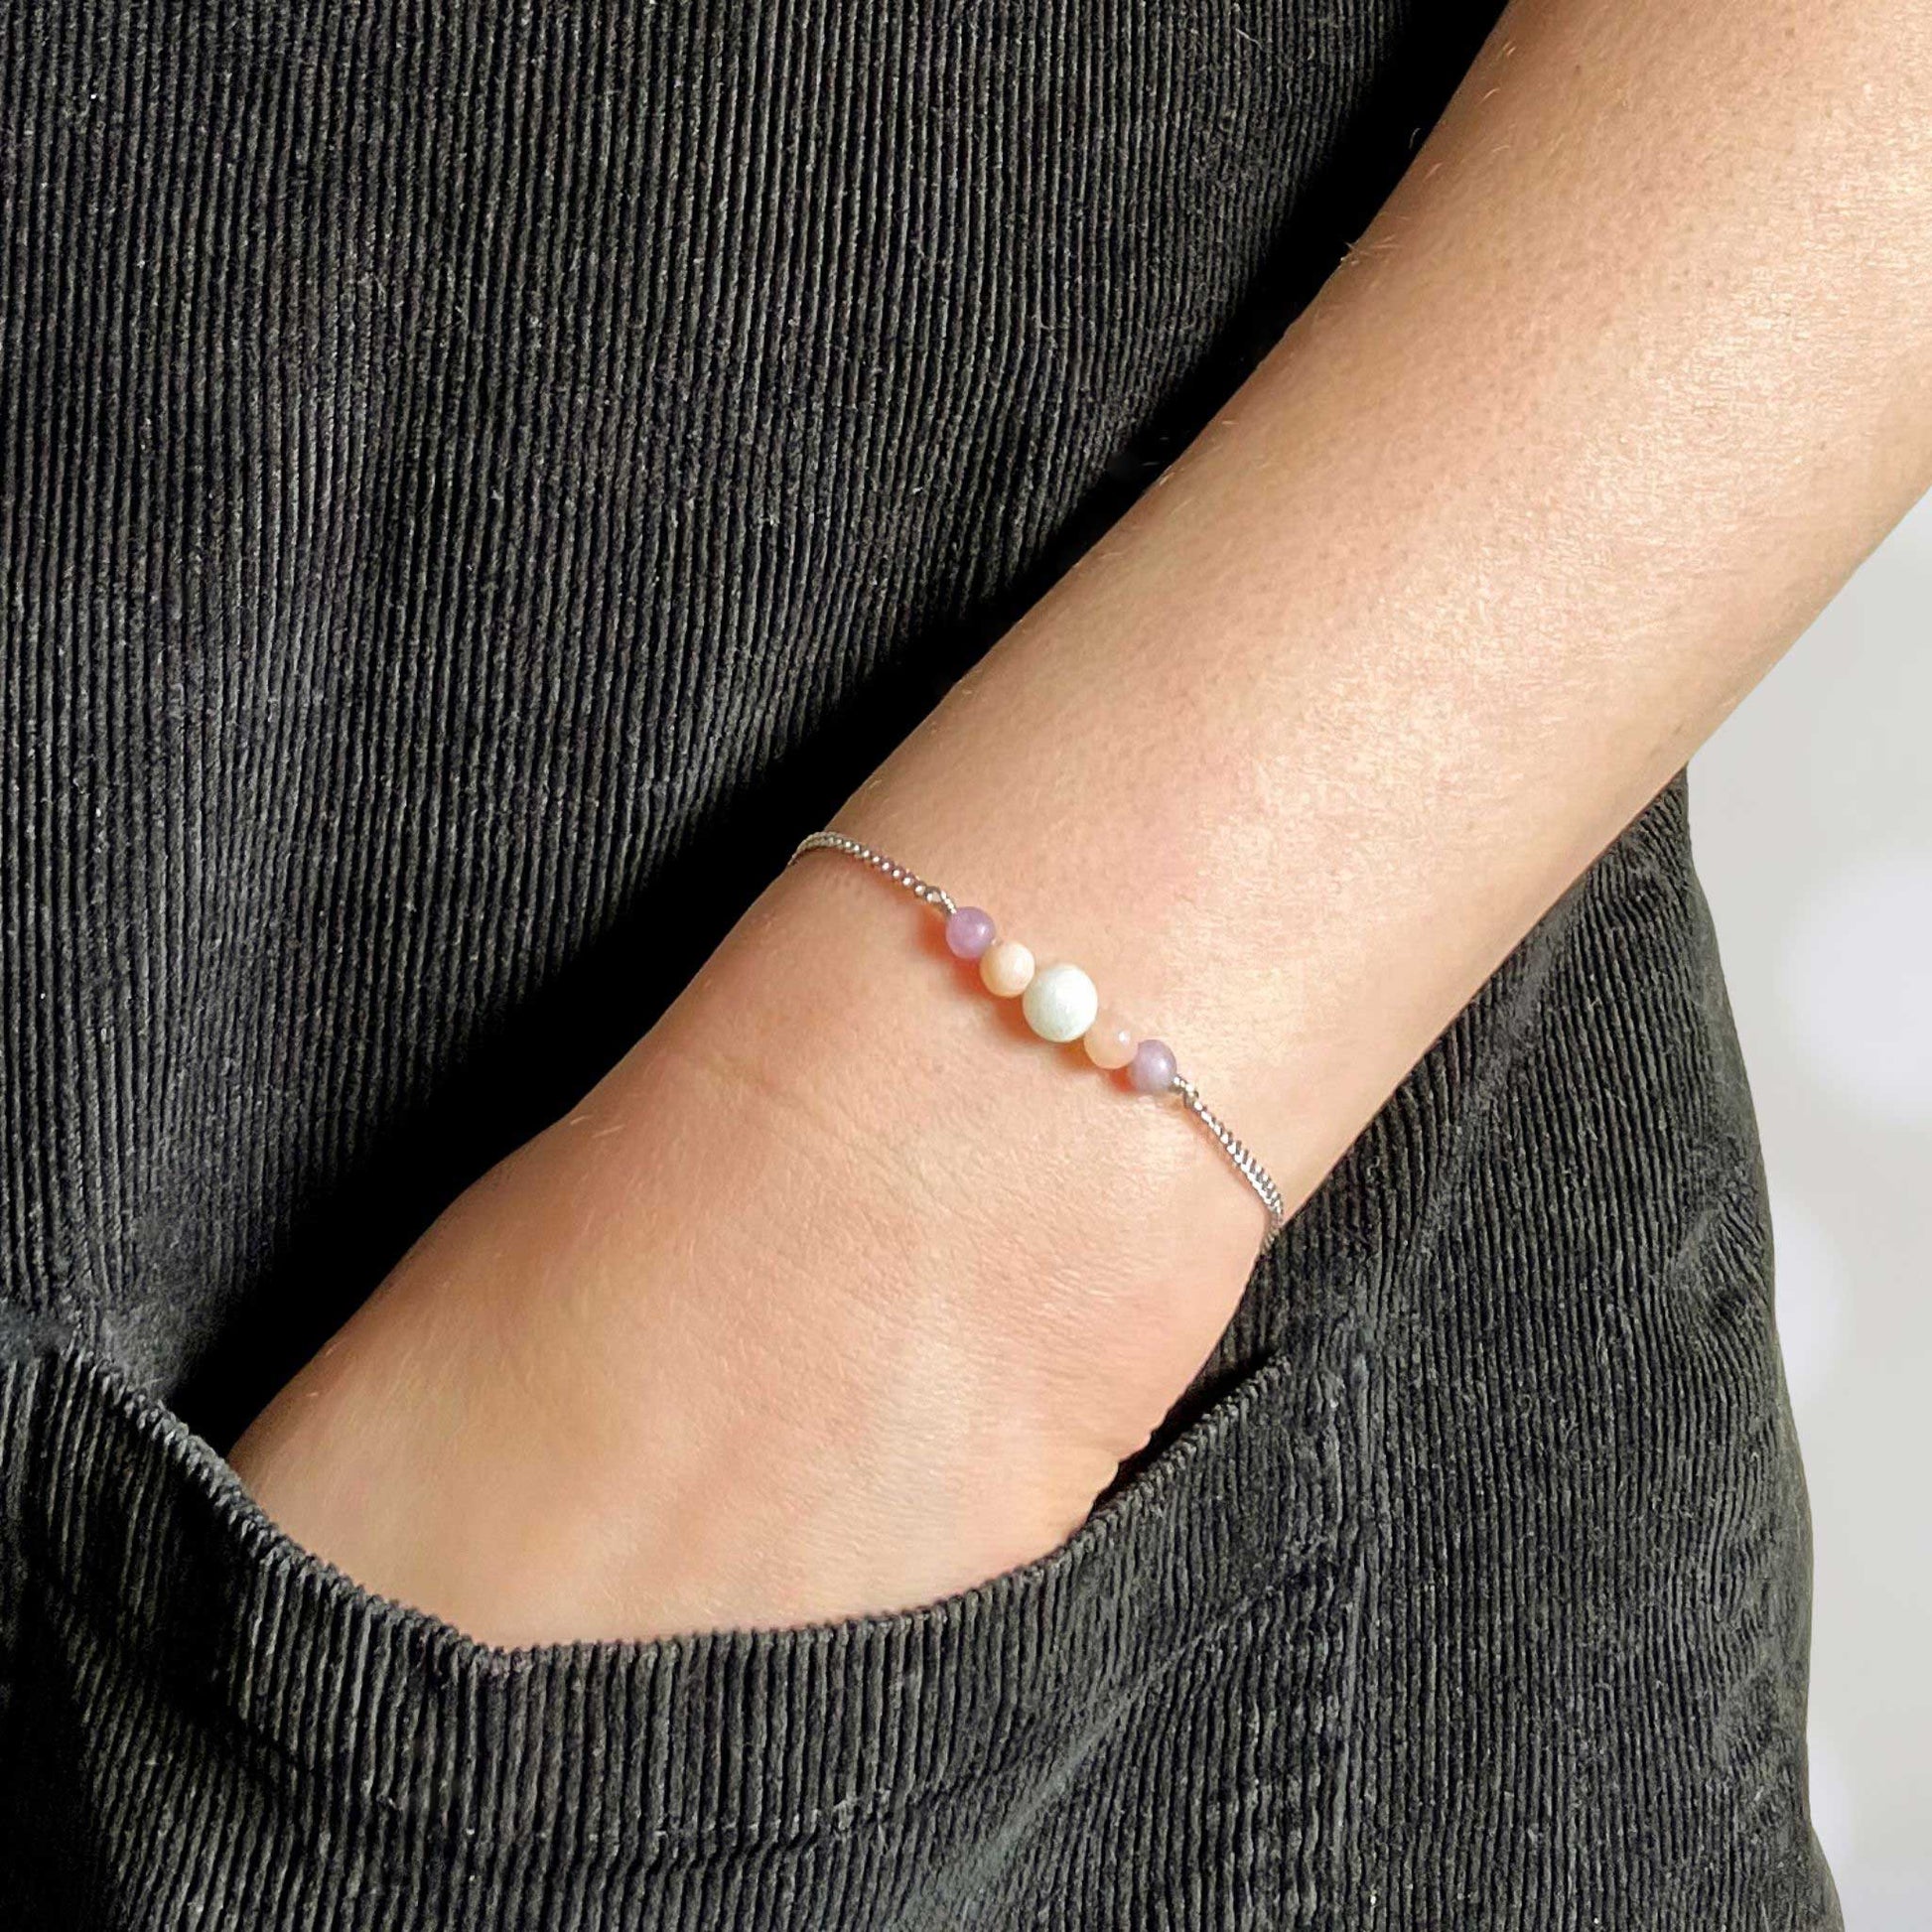 Woman with hand in pocket wearing pastel gemstone bracelet